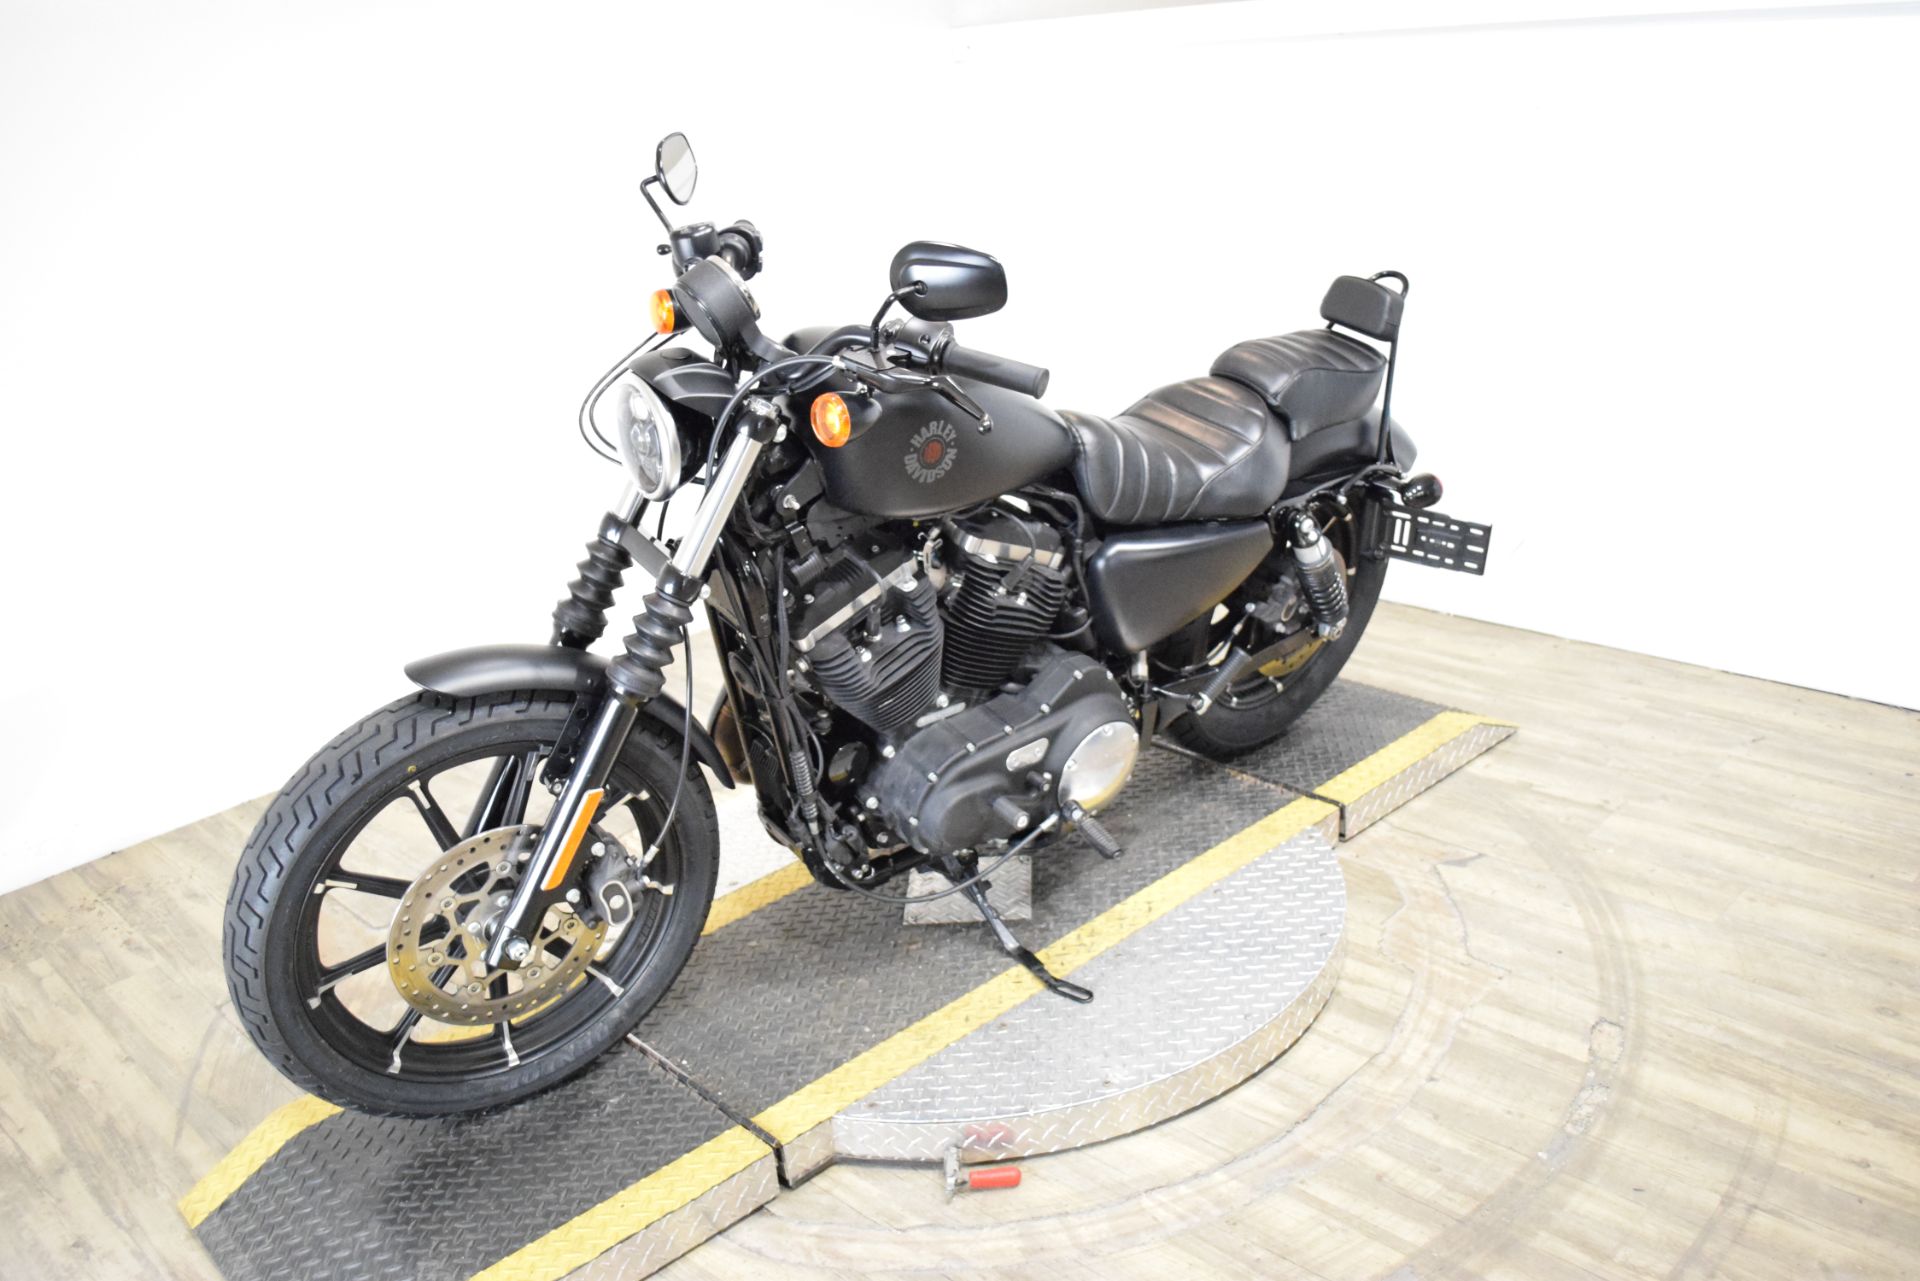 2020 Harley-Davidson Iron 883™ in Wauconda, Illinois - Photo 22